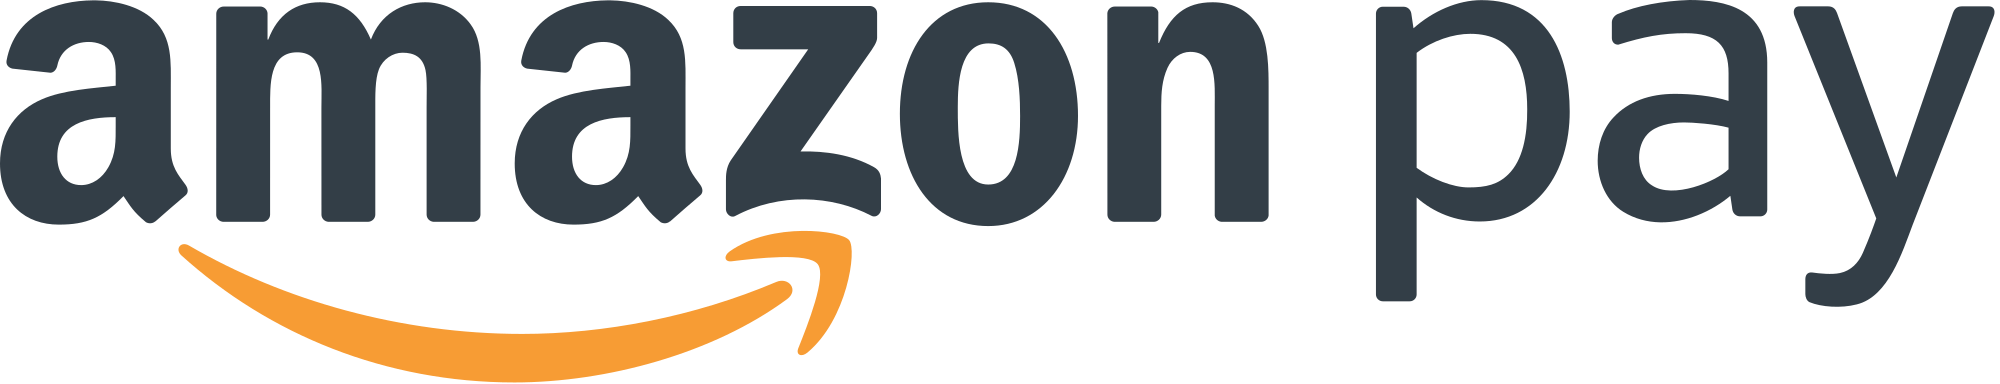 Pay Amazon Logo - Amazon Pay logo.svg